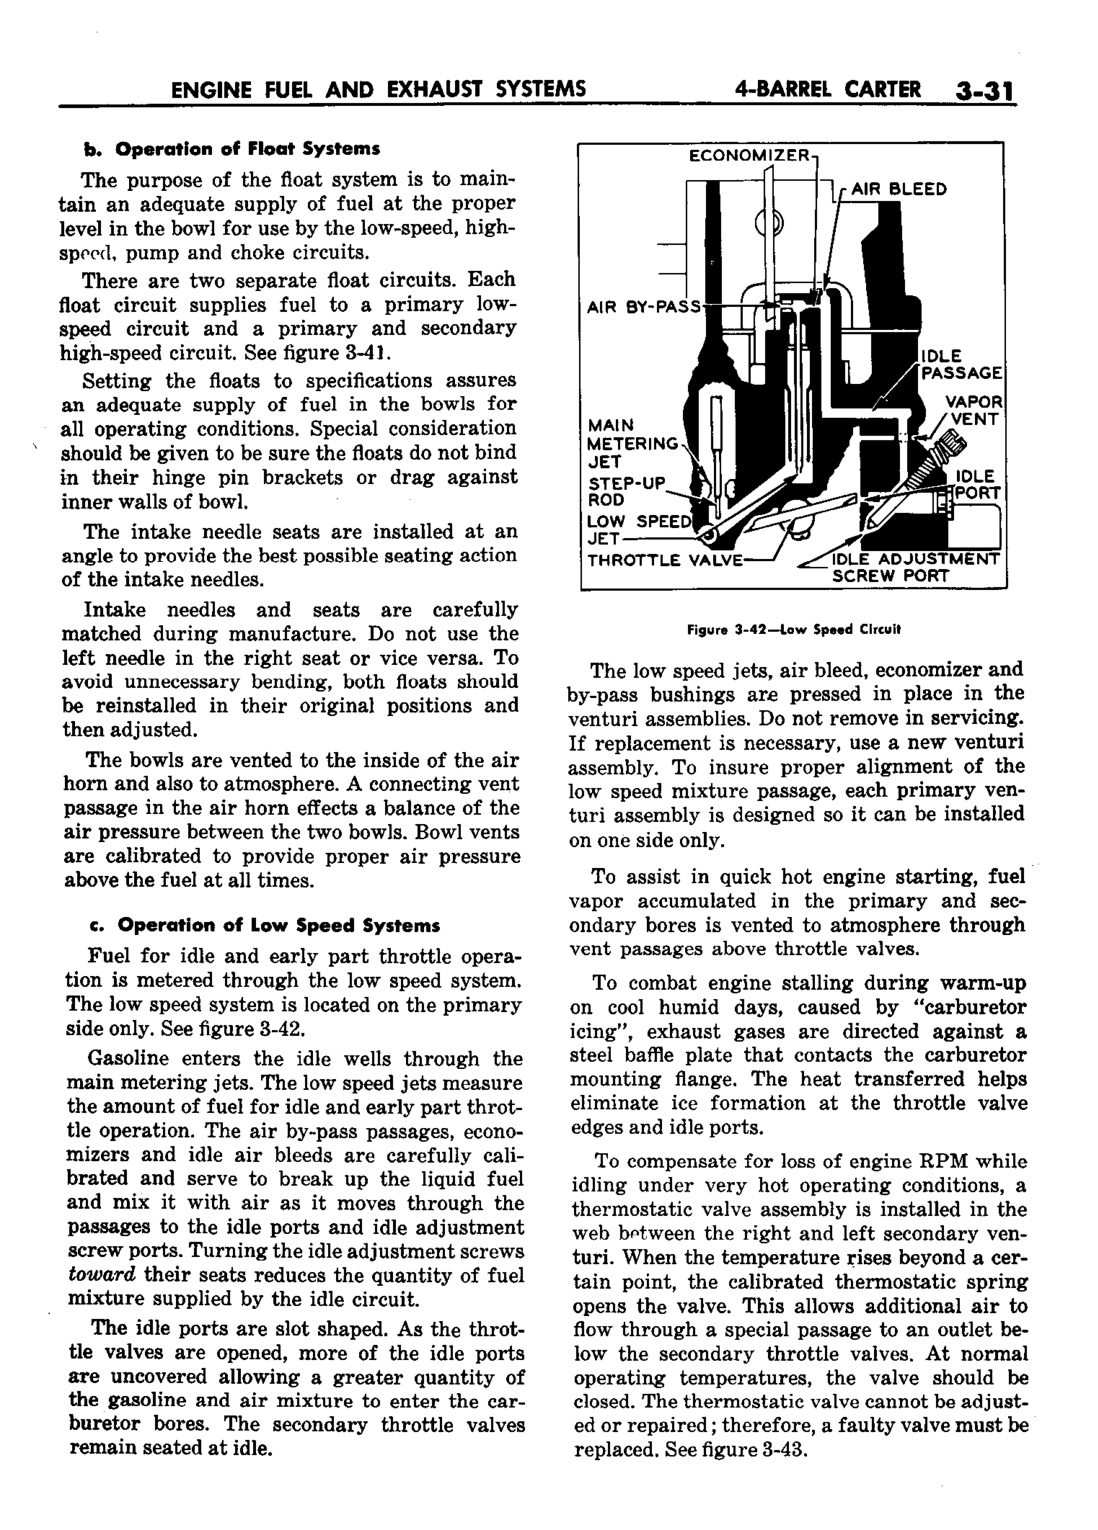 n_04 1959 Buick Shop Manual - Engine Fuel & Exhaust-031-031.jpg